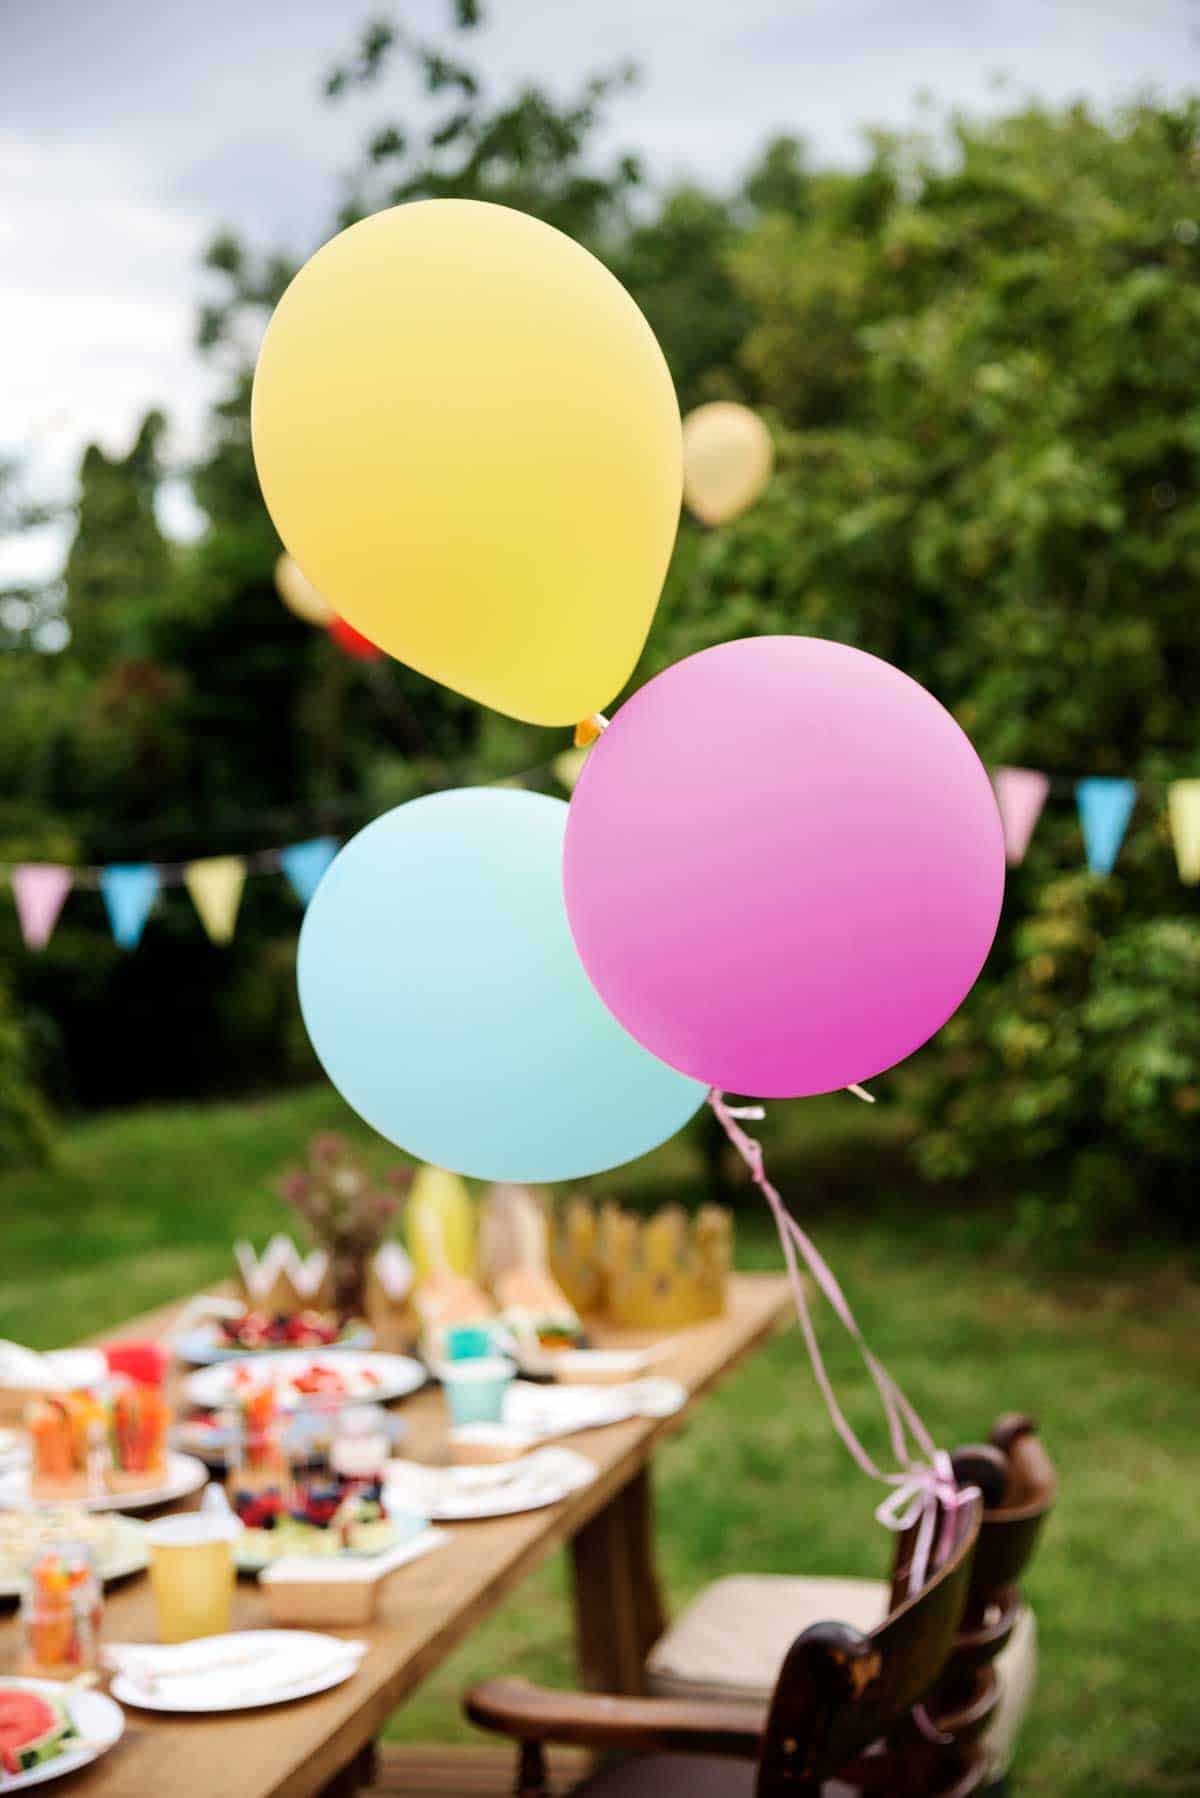 Colourful balloons at  garden birthday picnic party. 